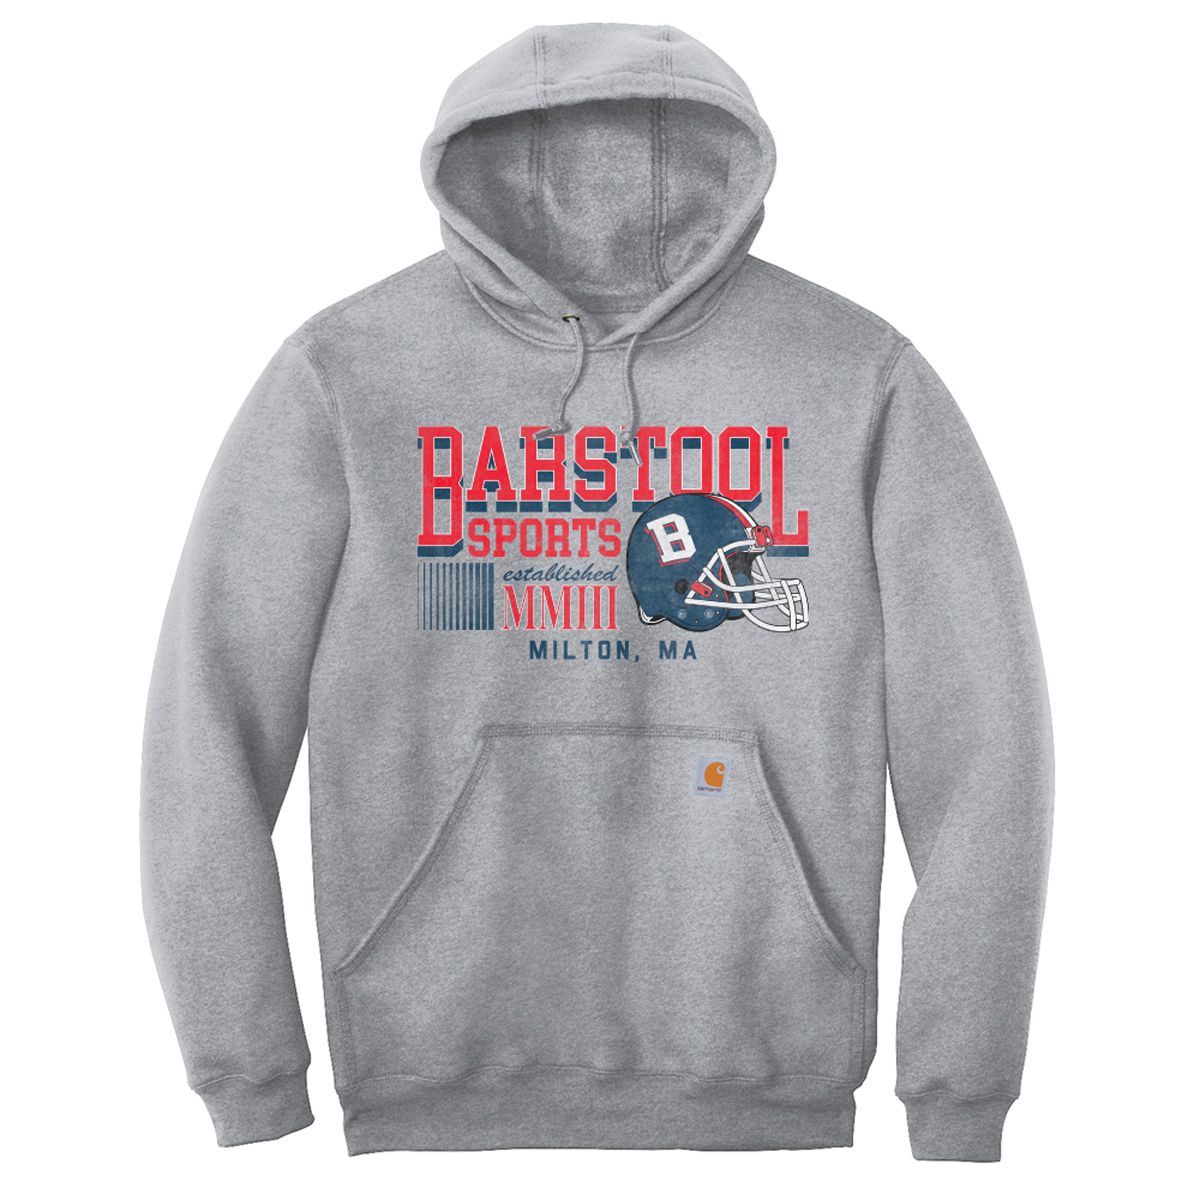 Barstool Sports Football Premium Hoodie-Hoodies & Sweatshirts-Barstool Sports-Grey-S-Barstool Sports